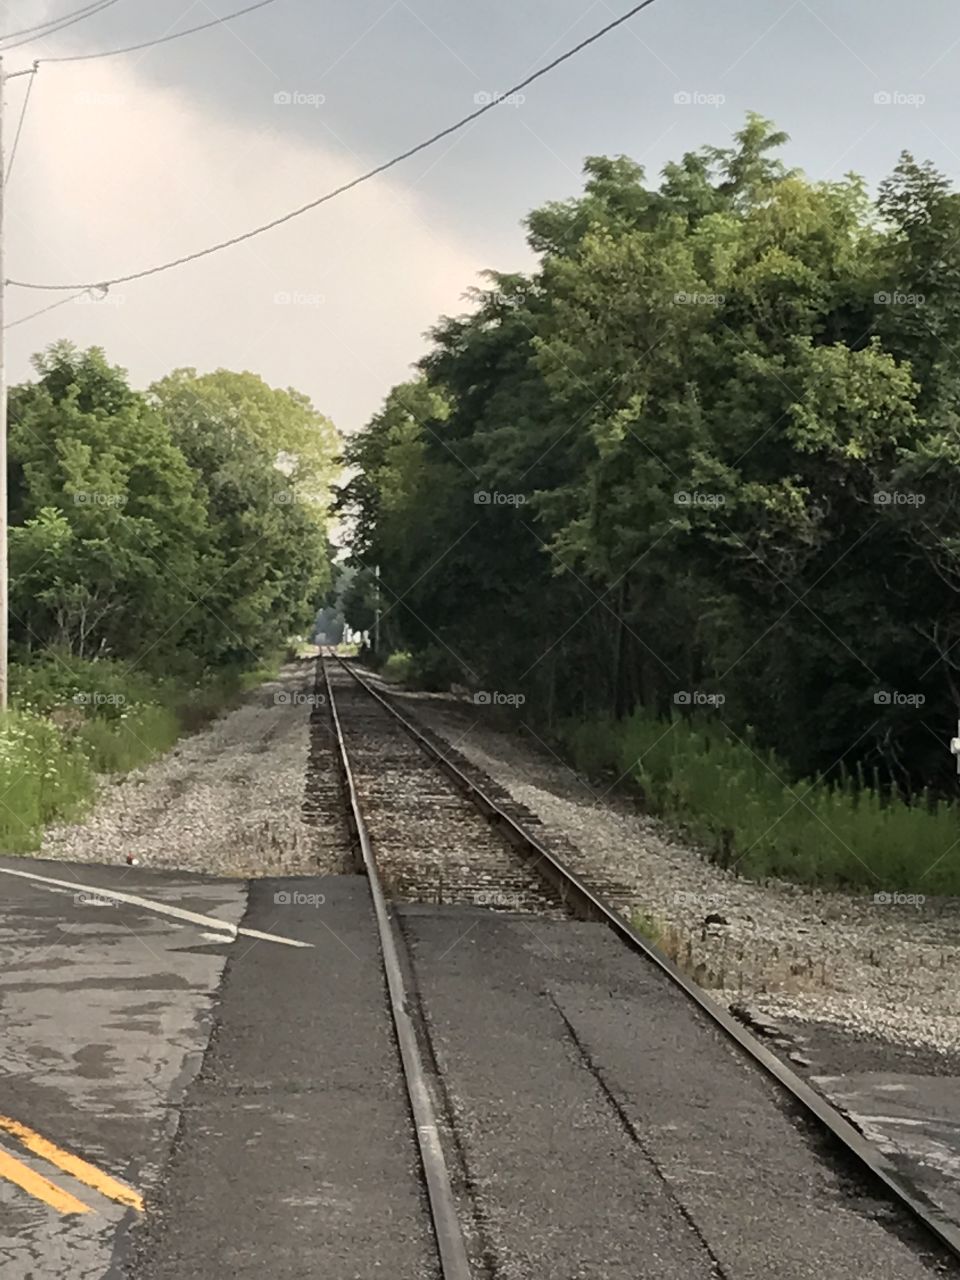 Train tracks. Railroad crossing.